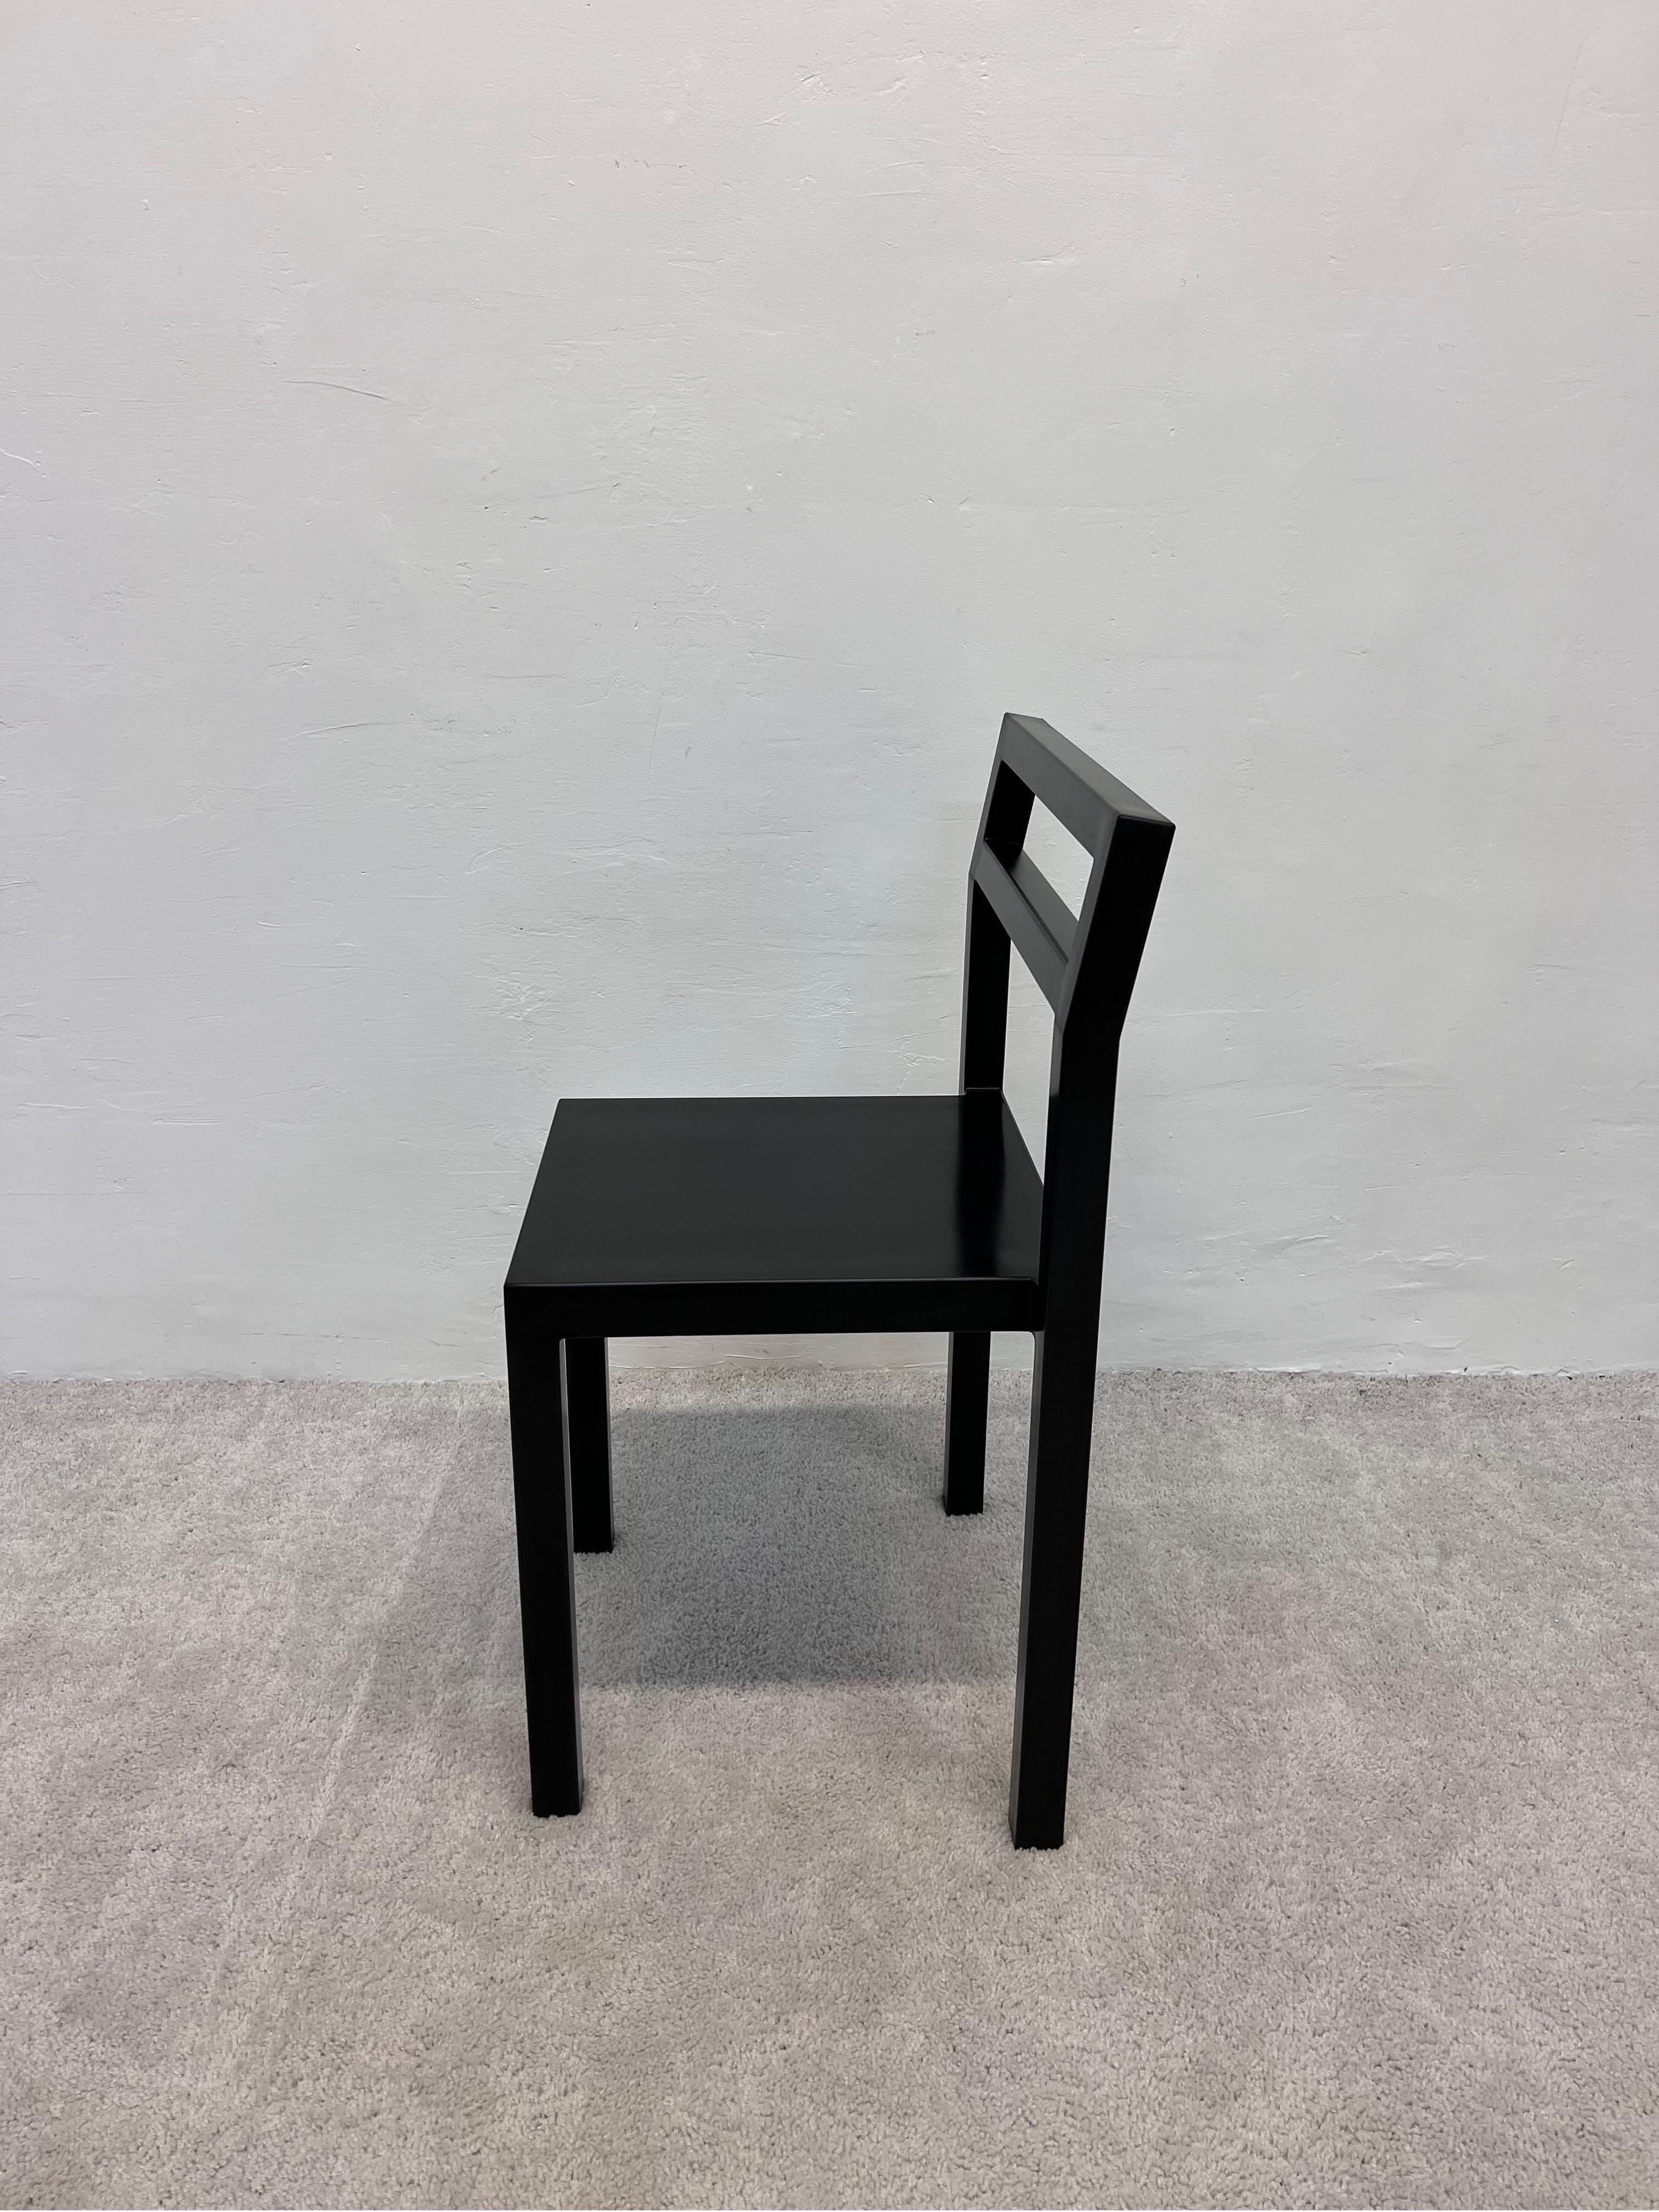 Contemporary Black Non Chair Designed by Komplot for Kallemo Ab, Sweden 2000